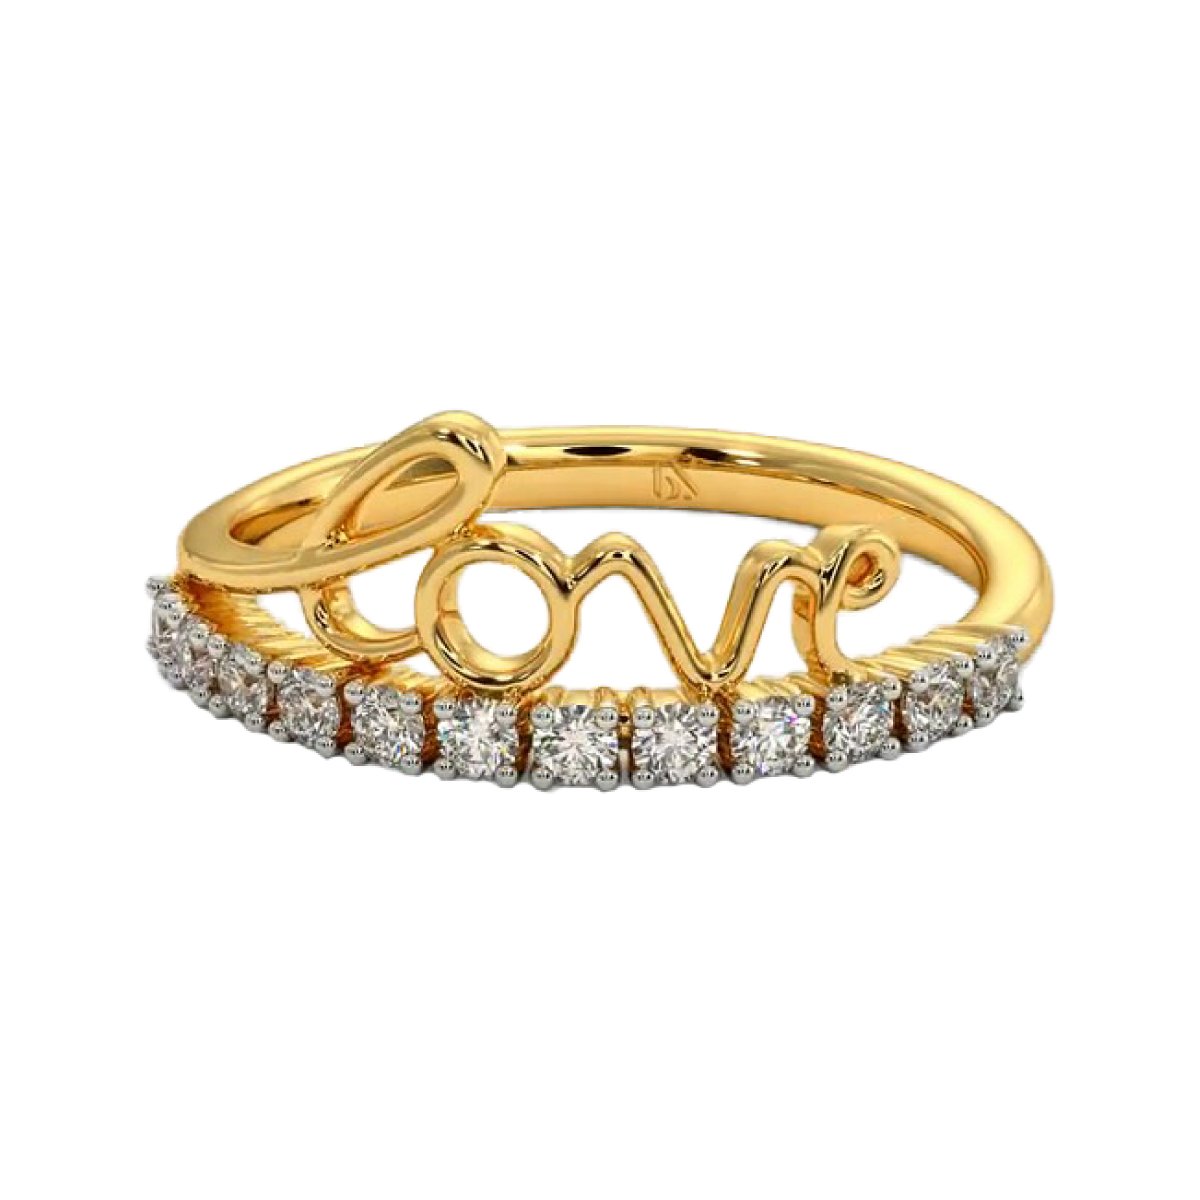 Trj Love Design Hallmark 22kt Gold Finger Ring For Ladies Approx Wgt:-  1.560 Gram With Purity Smart Card - 8 at Rs 11360 | सोने की अंगूठी -  Rajlaxmi Jewellers, Kolkata | ID: 2852085570891